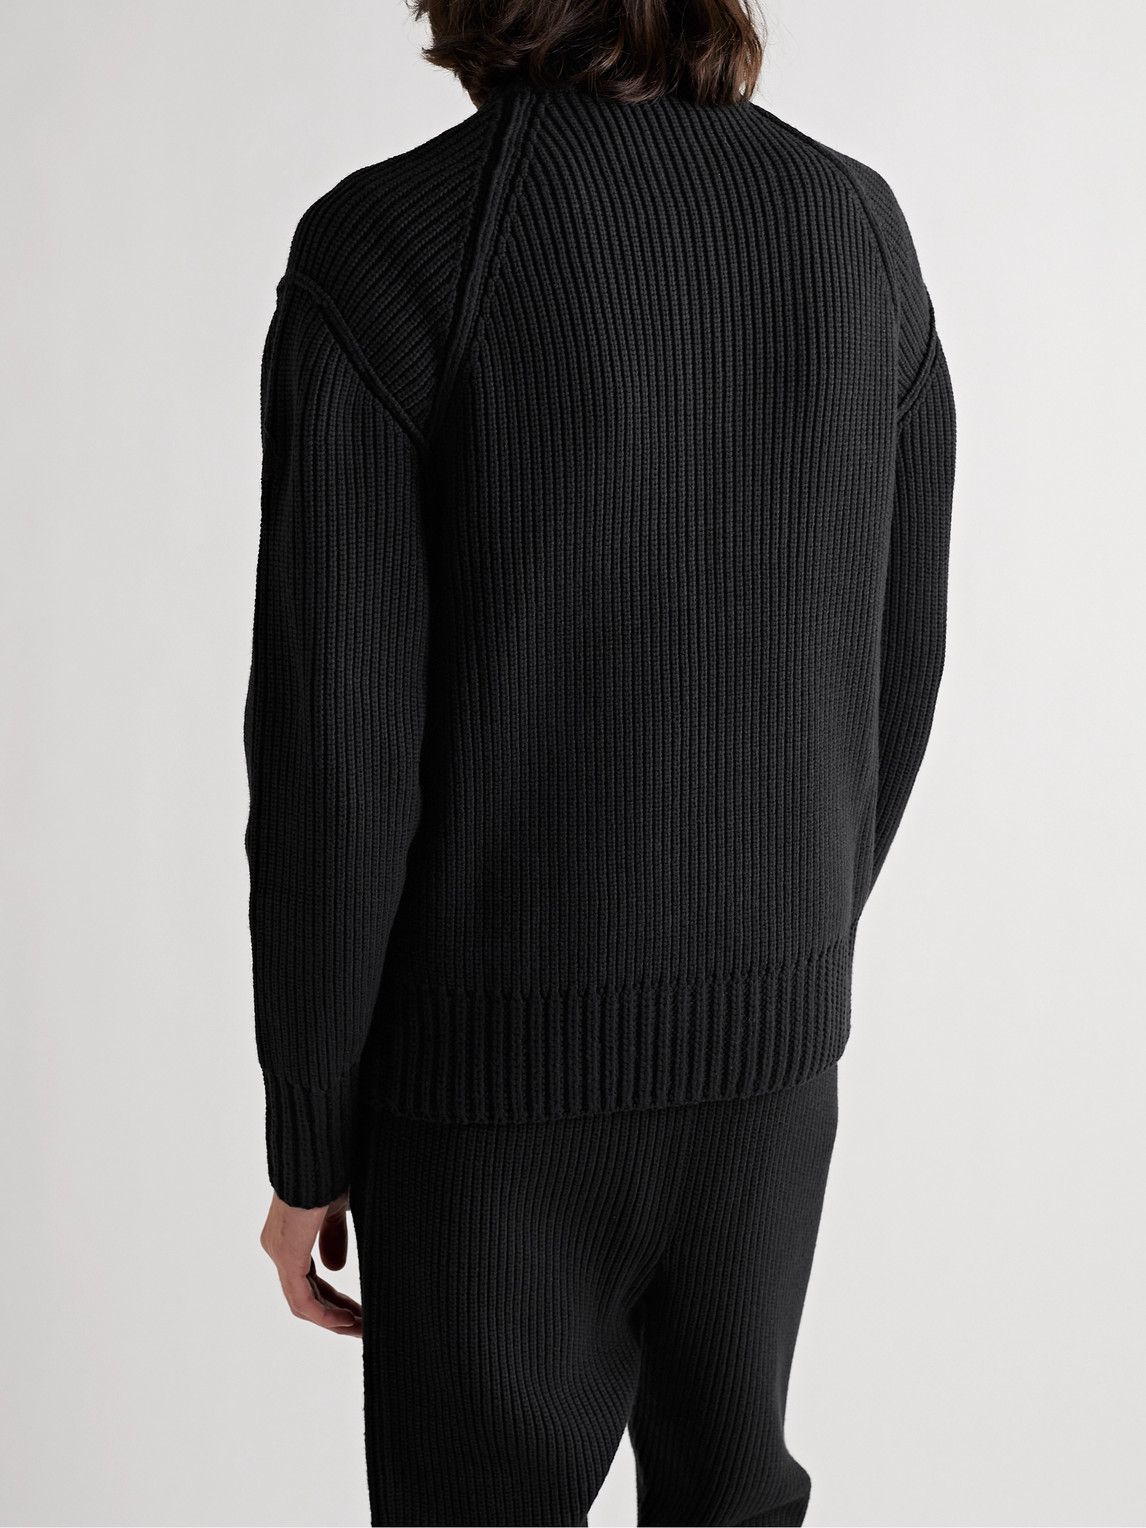 Moncler Genius - 6 Moncler 1017 ALYX 9SM Ribbed-Knit Half-Zip Sweater ...